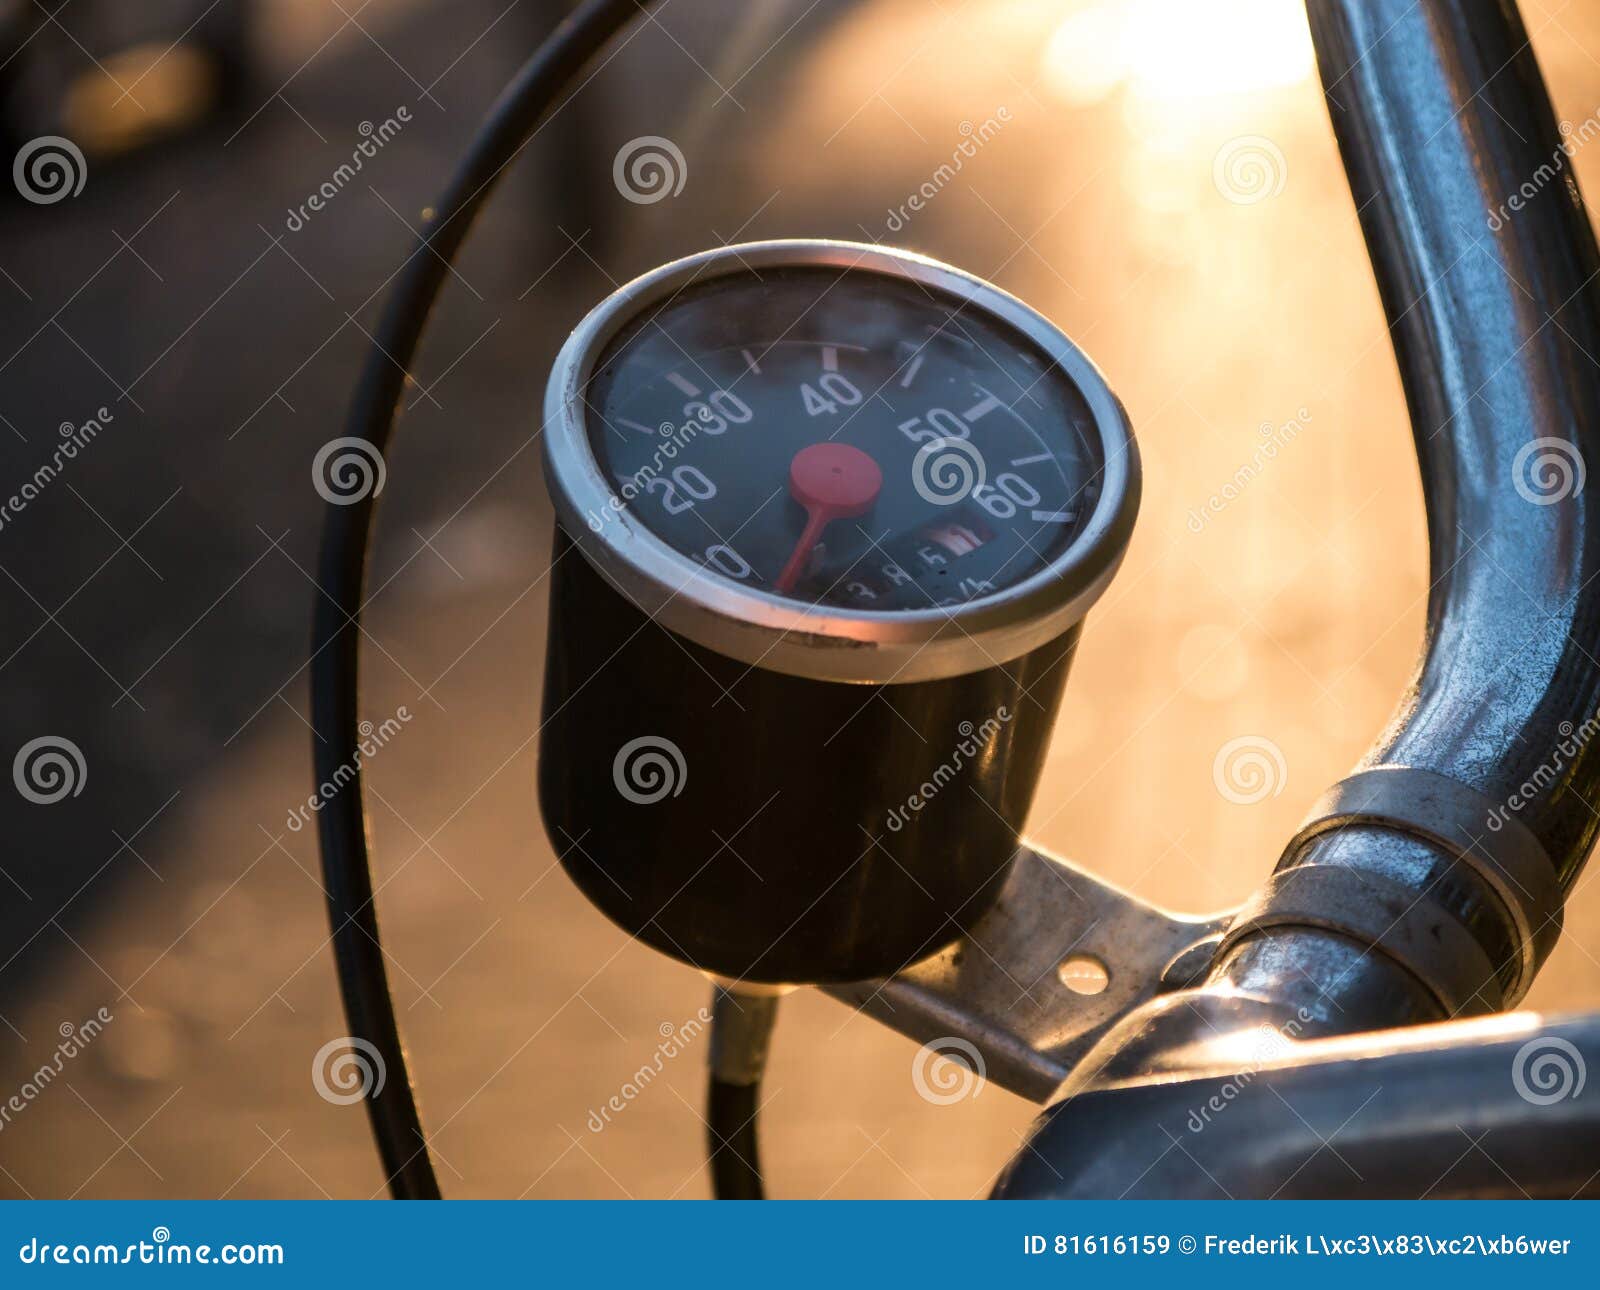 retro analog bicycle speedometer